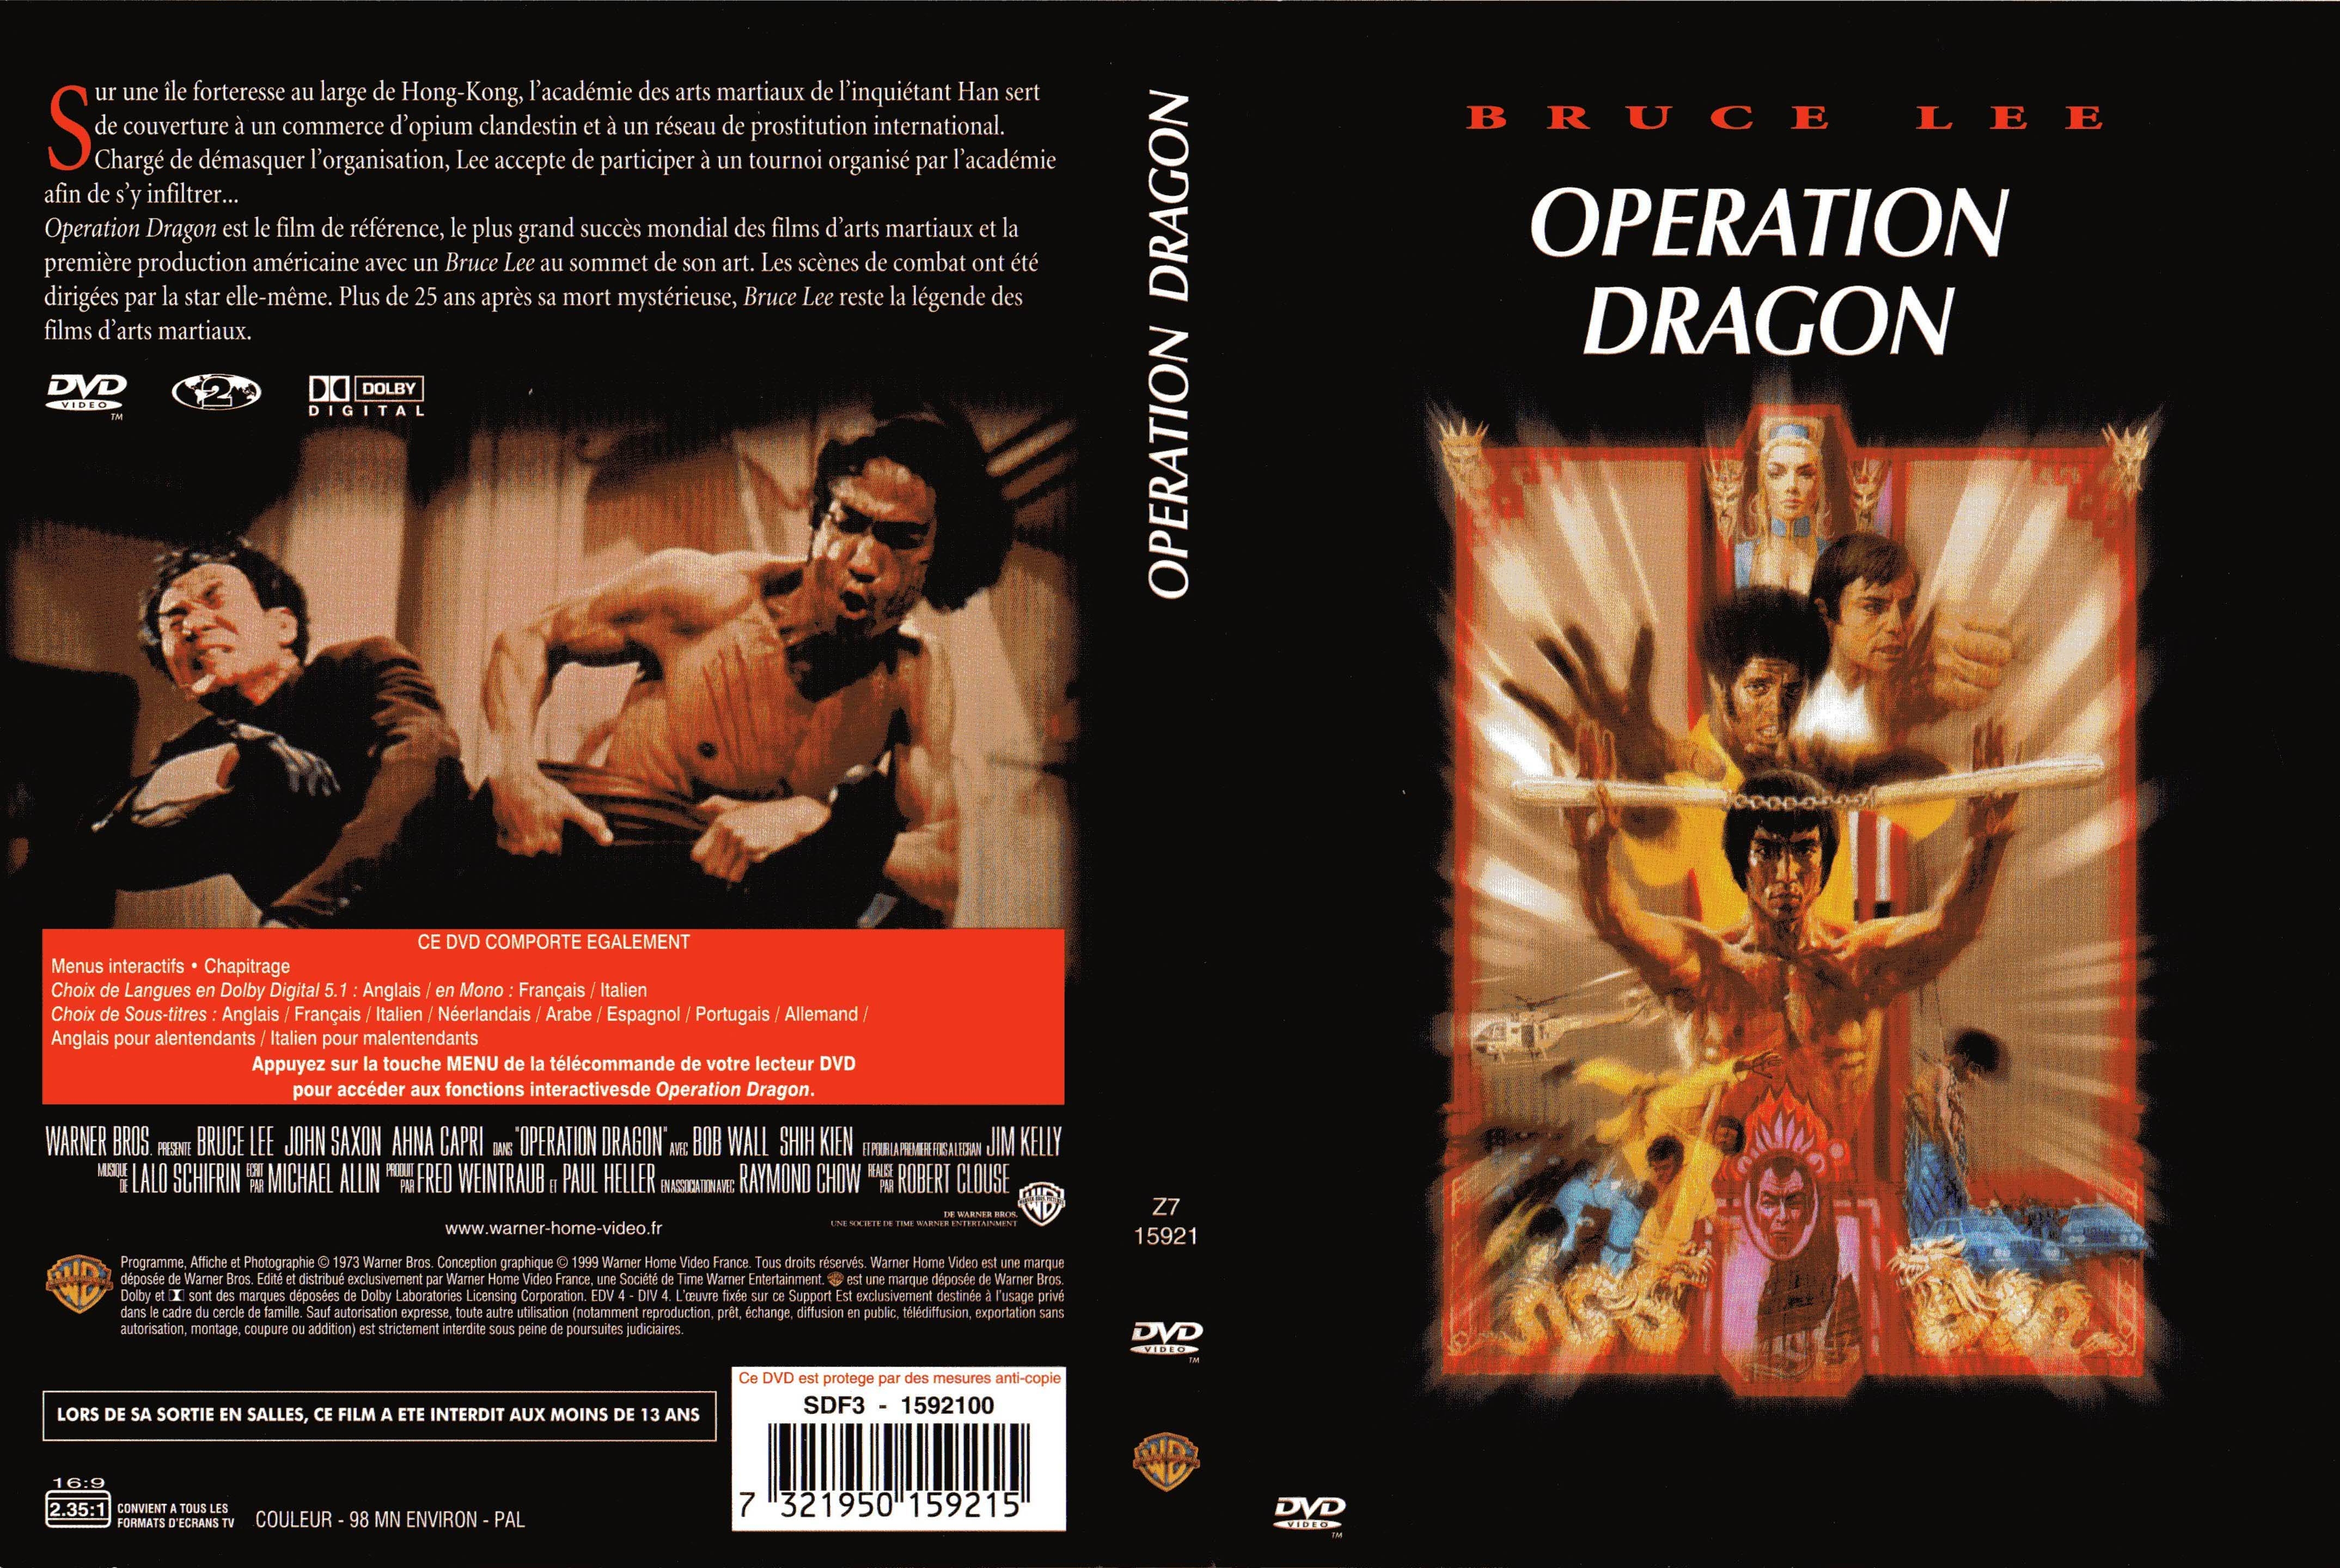 Jaquette DVD Opration dragon